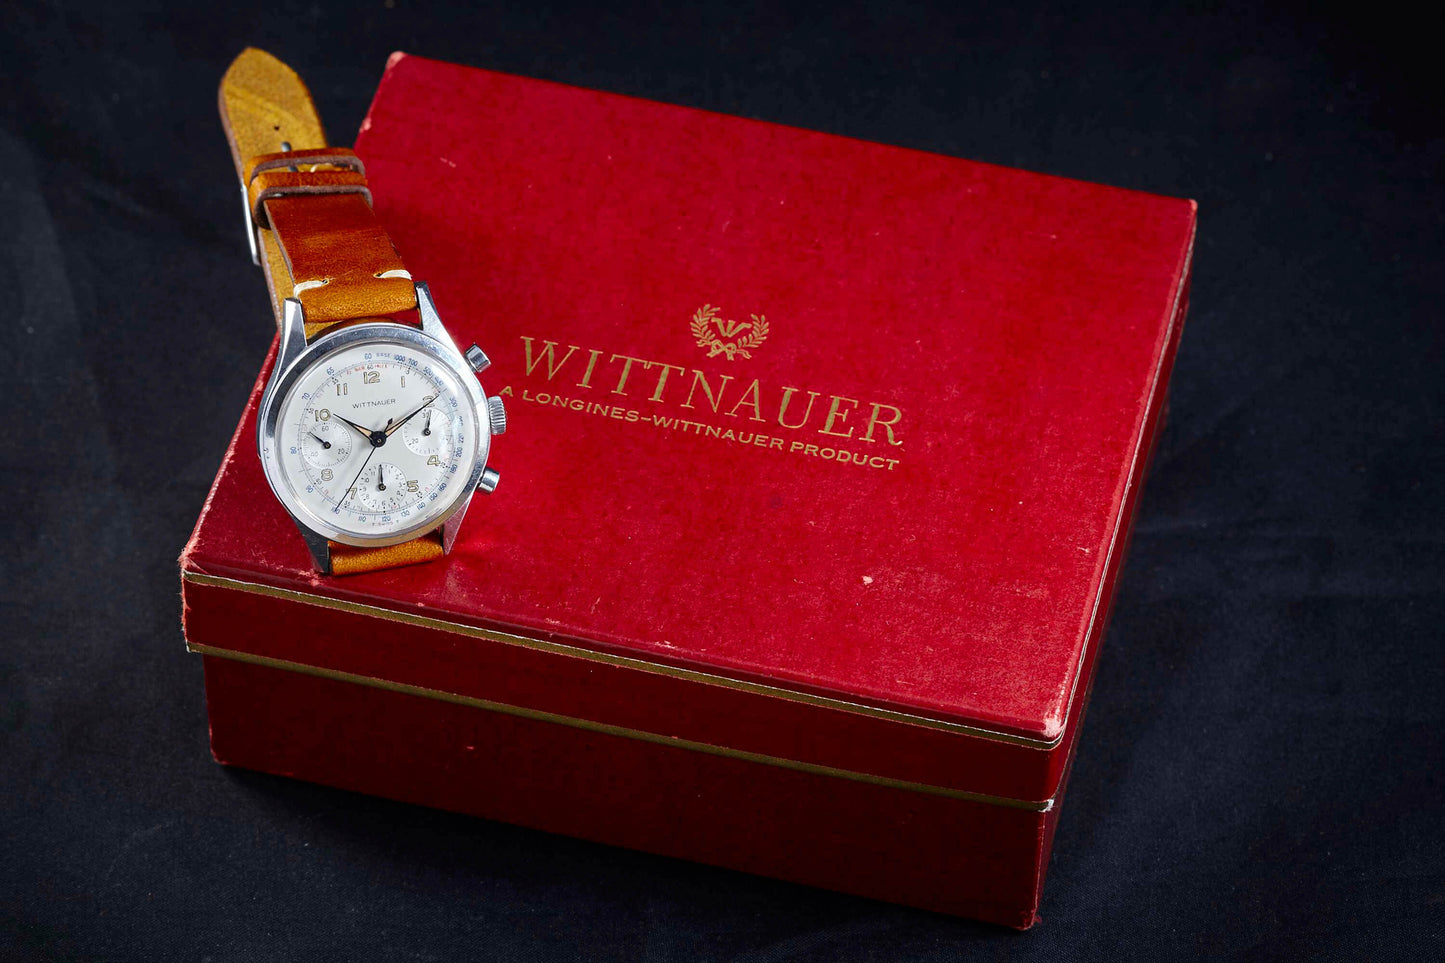 Wittnauer Chronograph